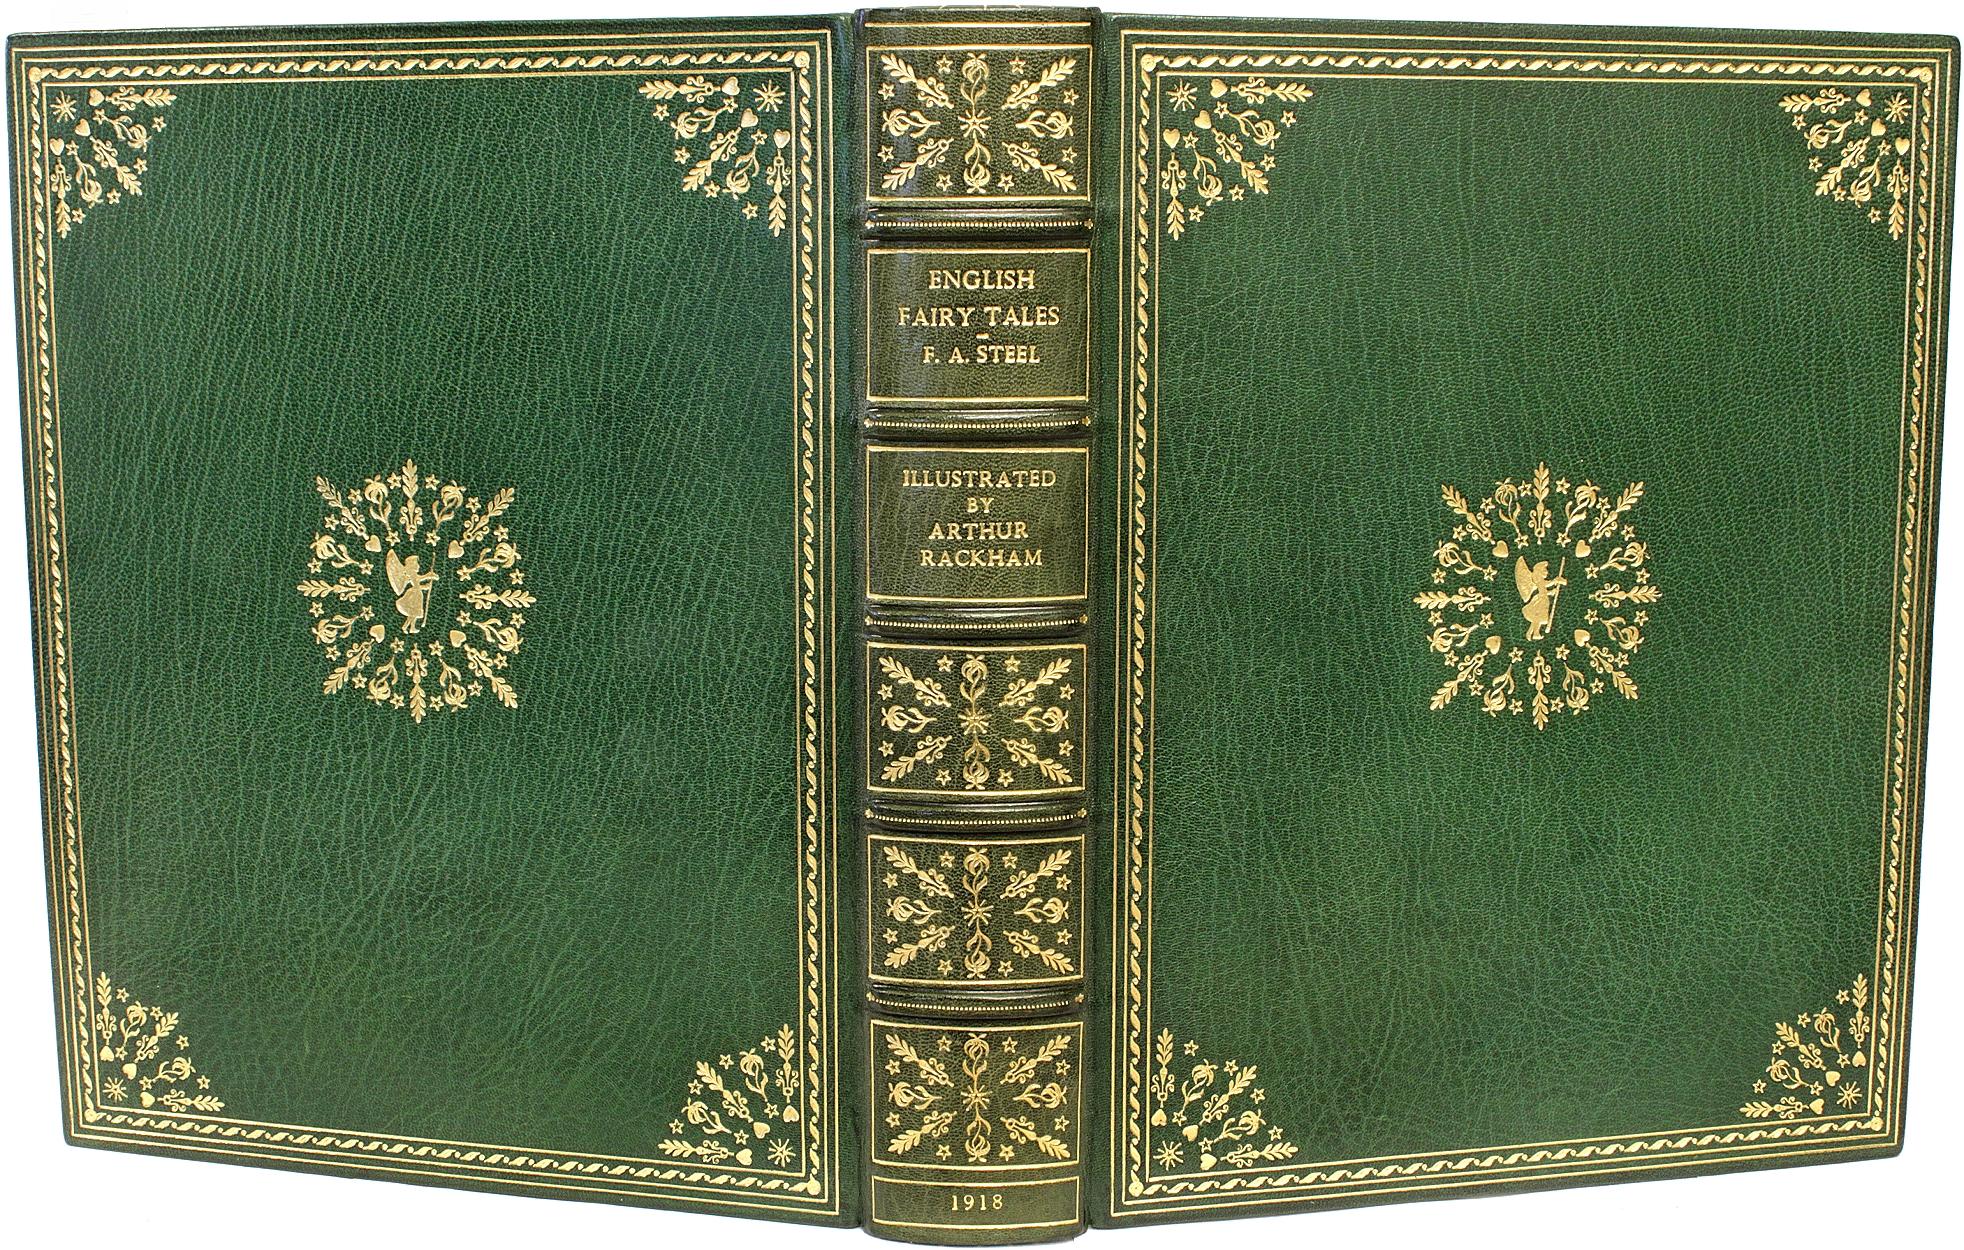 AUTHOR: STEEL, Flora Annie (Arthur Rackham). 

TITLE: English Fairy Tales. Retold by Flora Annie Steel.

PUBLISHER: NY: Macmillan Co., 1918.

DESCRIPTION: LARGE PAPER LIMITED EDITION. 1 vol., small folio, 11